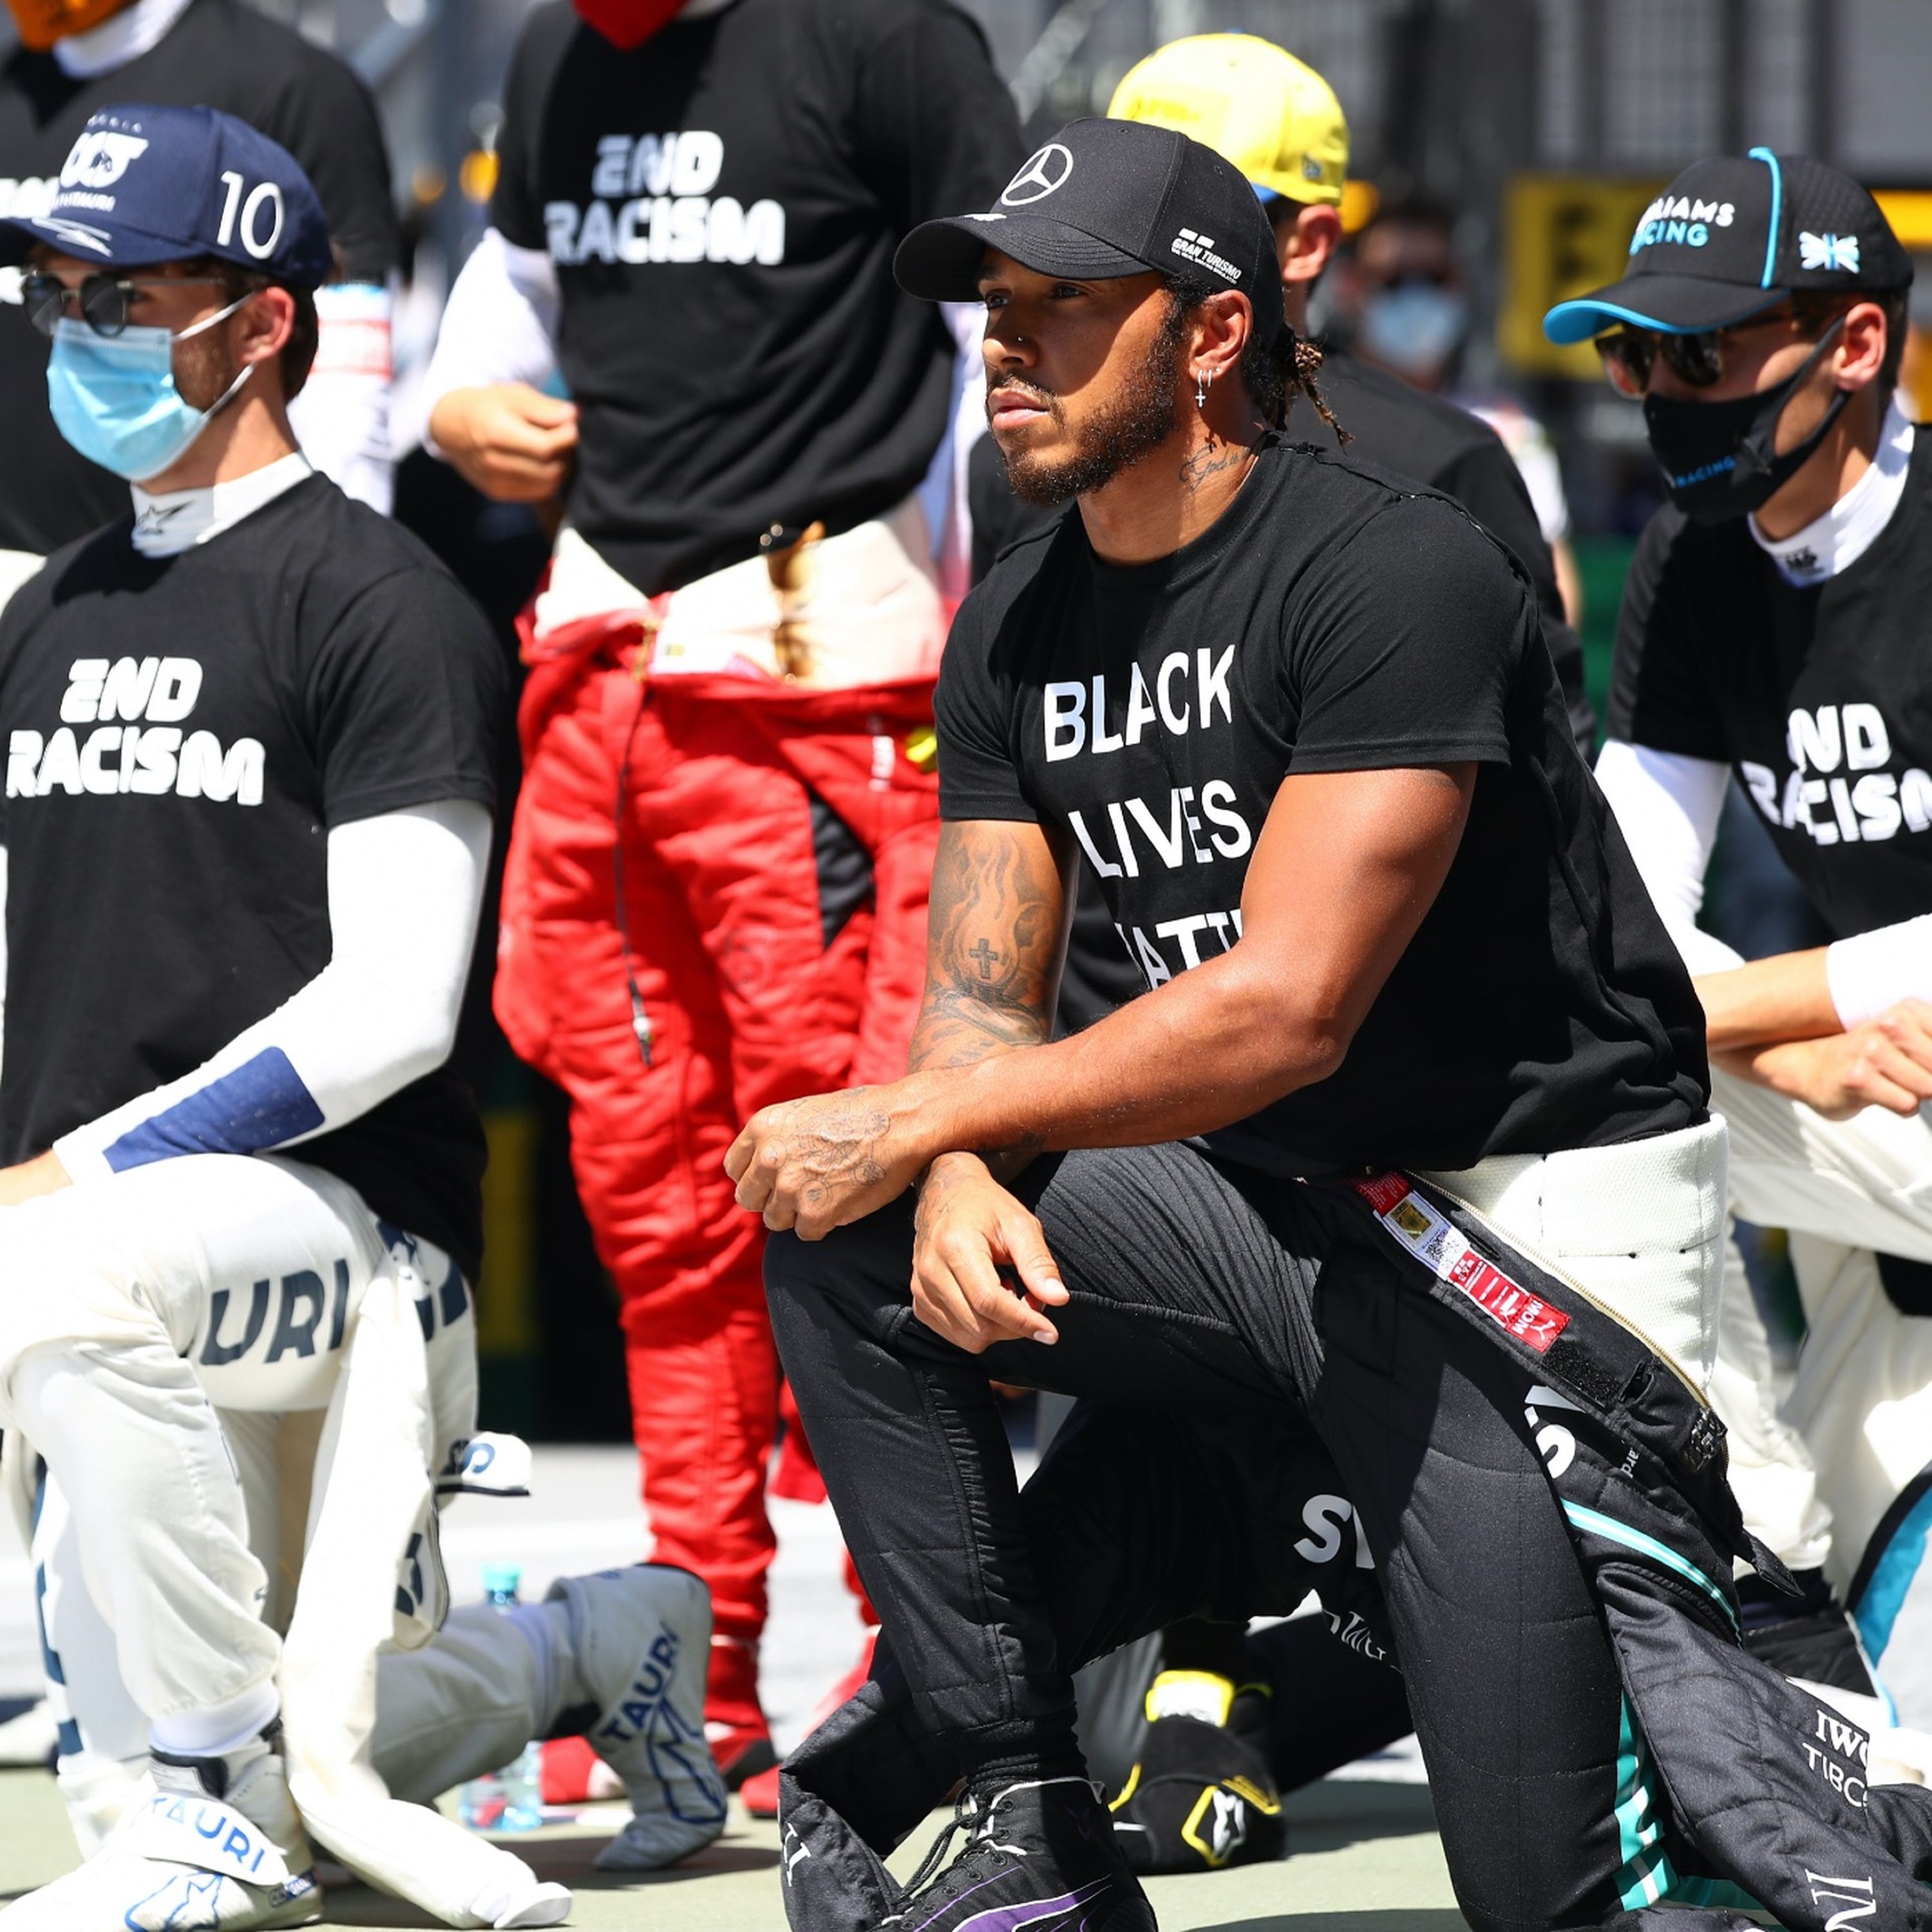 Bitesize: Karun Chandhok - Changing the face of Formula One